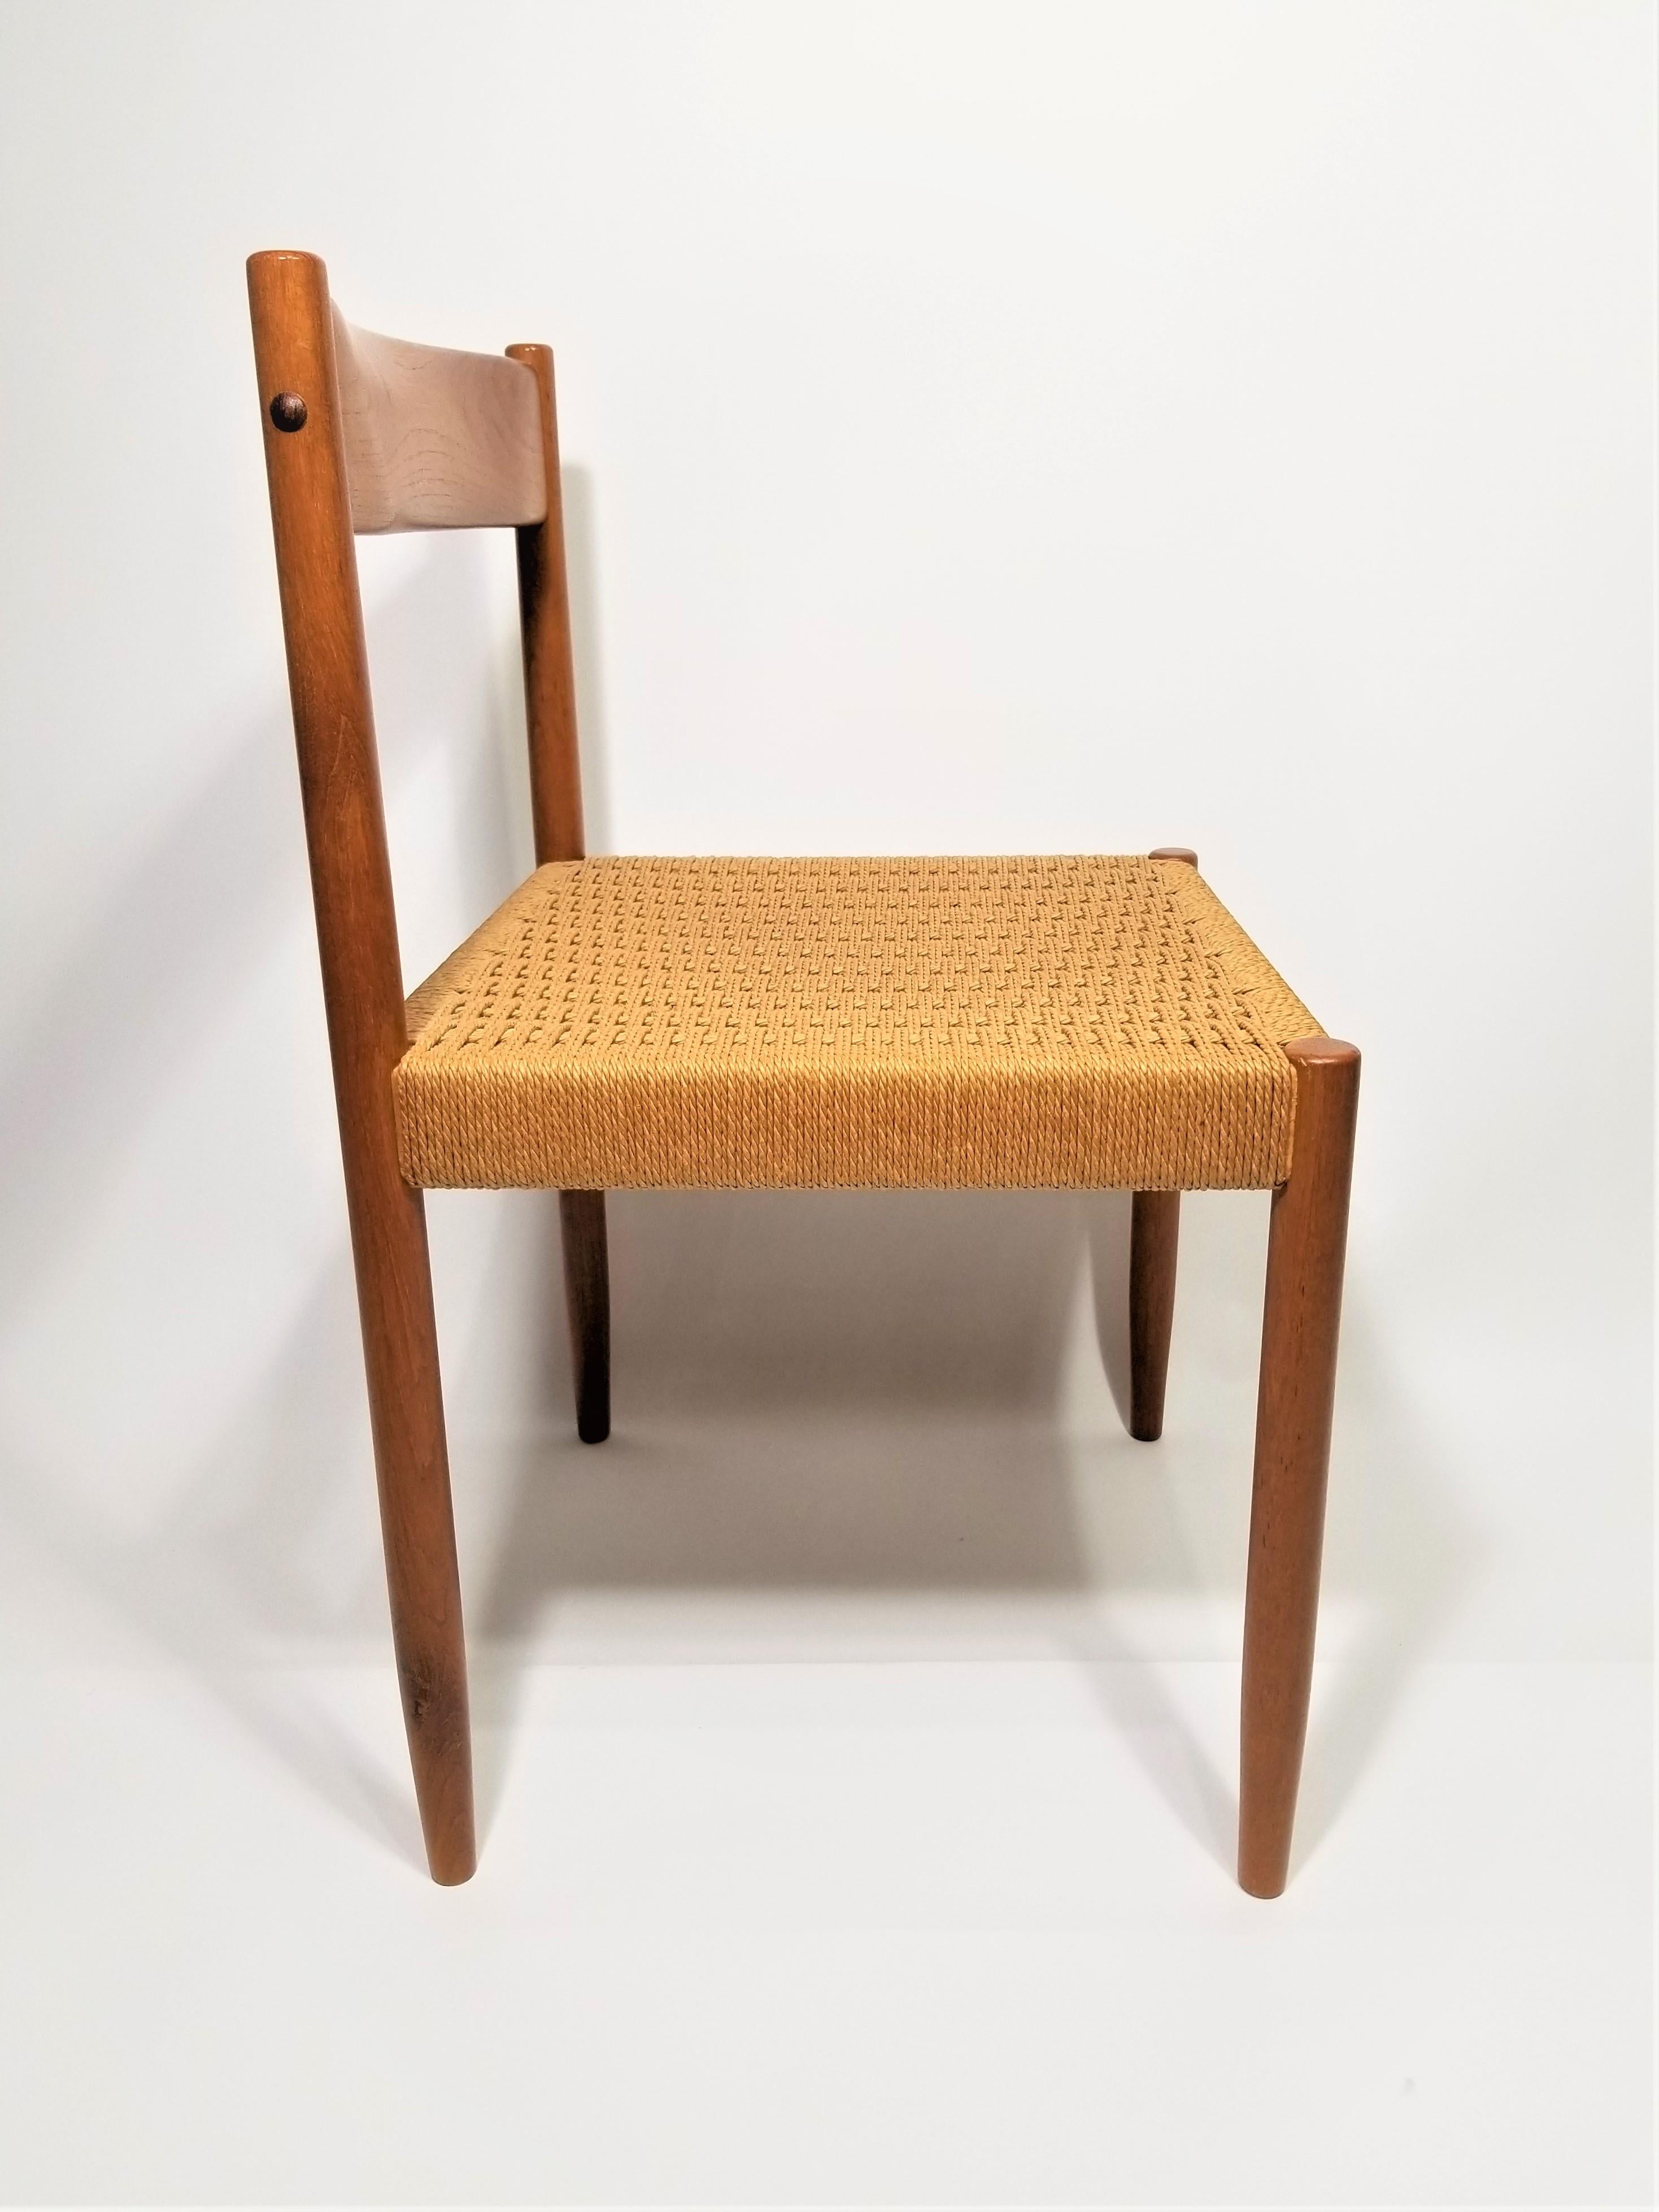 Poul Volther for Frem Rojle Danish Teak Woven Chair Midcentury 1960s  For Sale 10